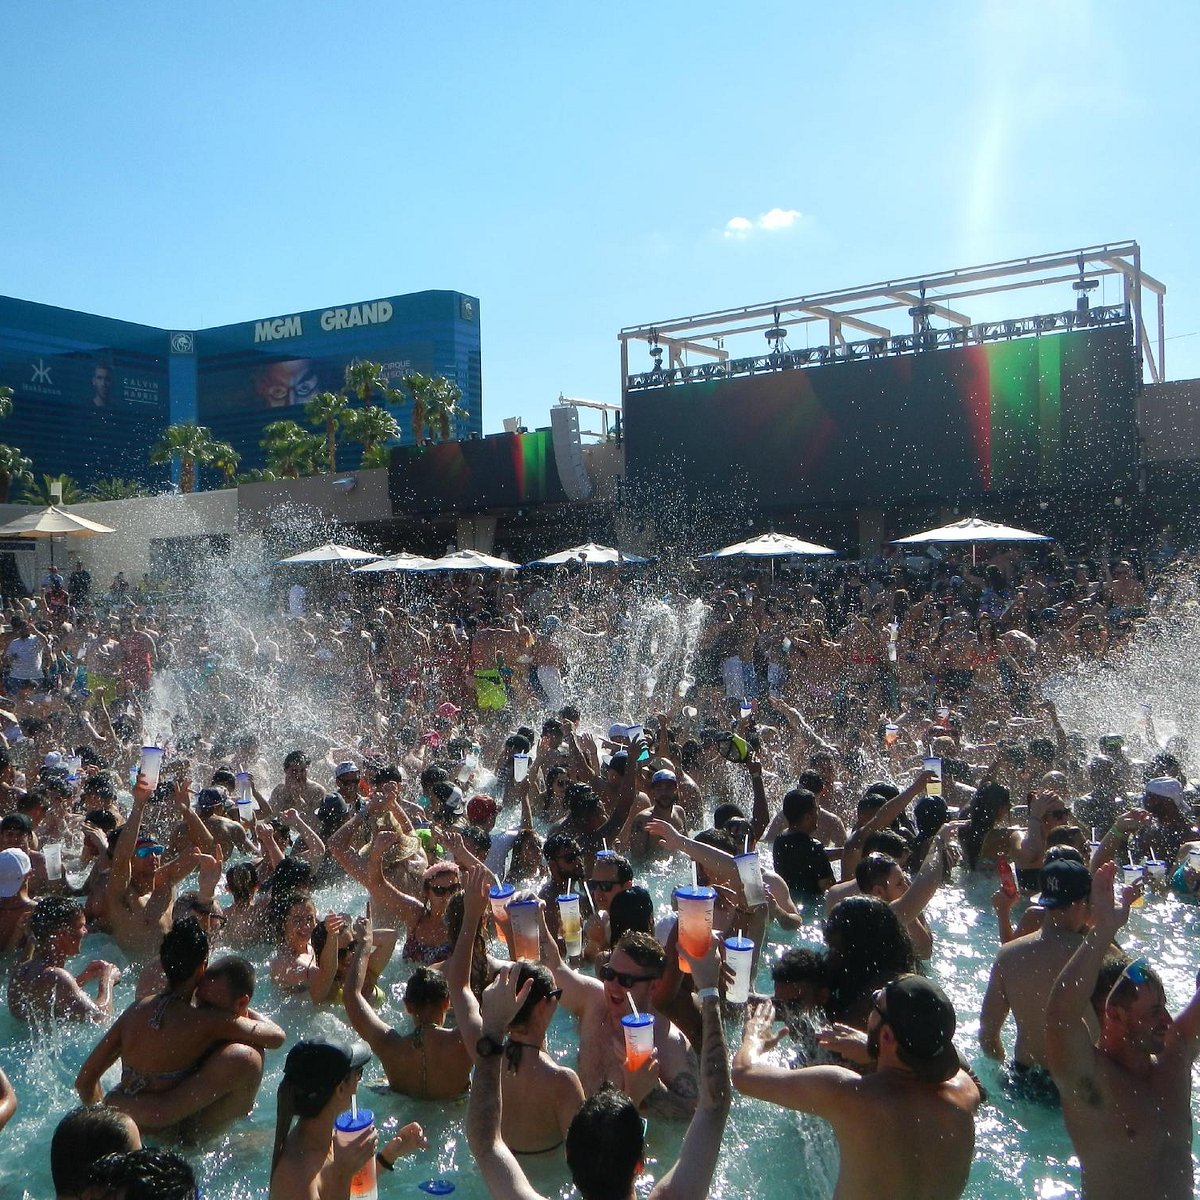 BEST Vegas Pool Parties: Wet Republic, MGM Grand & Drai's Beach Club, The  Cromwell (Ep.25) 